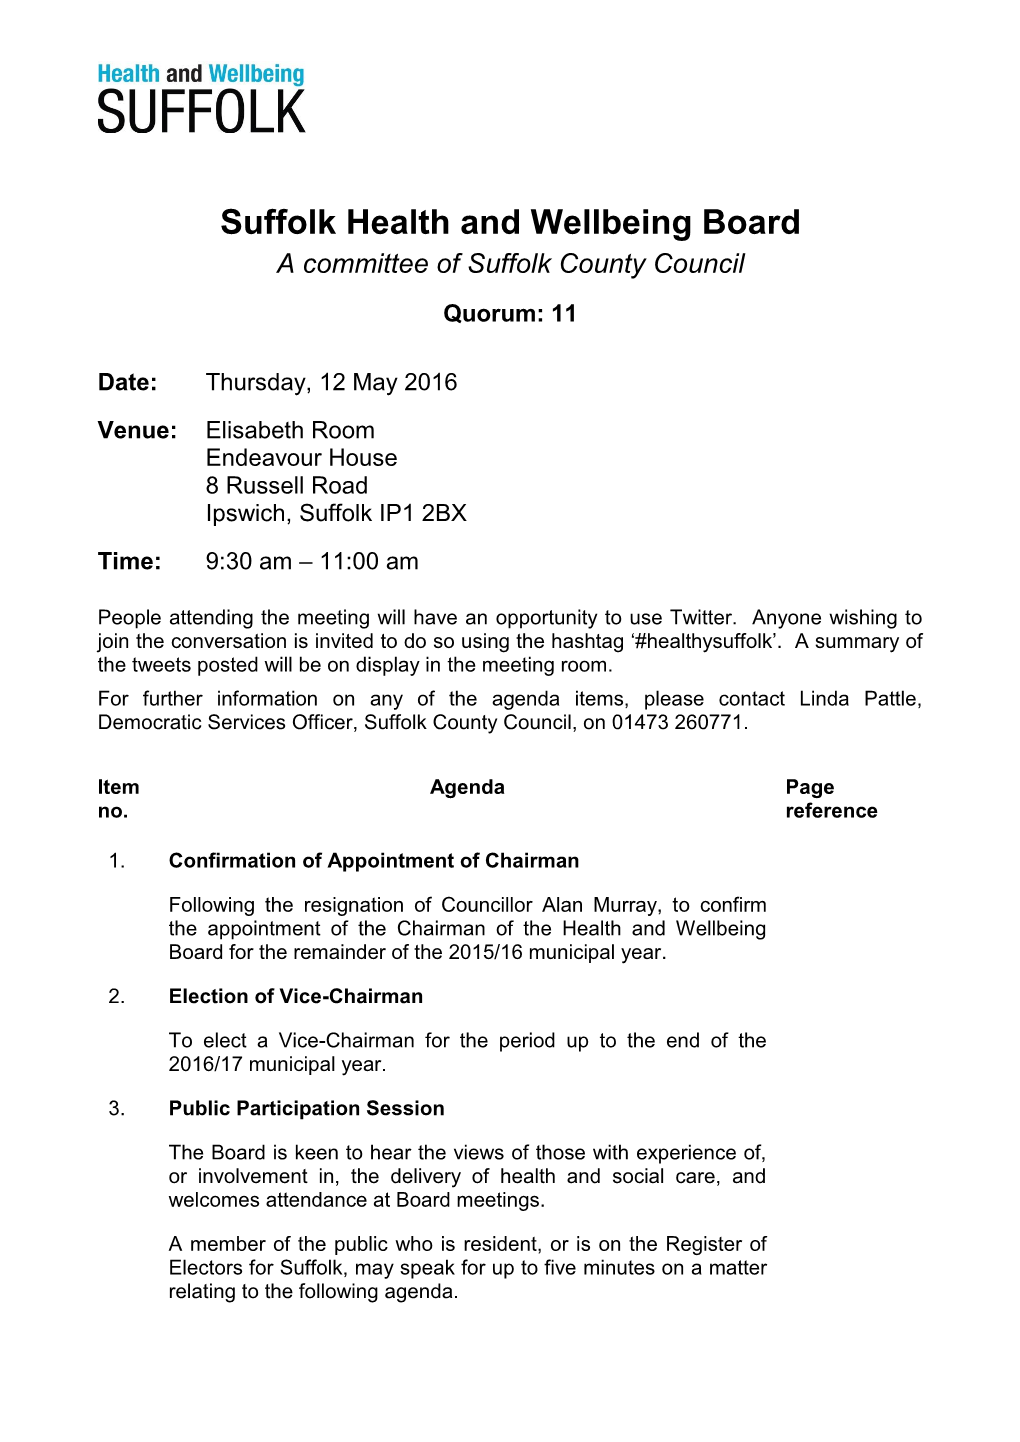 Suffolk Health and Wellbeing Board Agenda